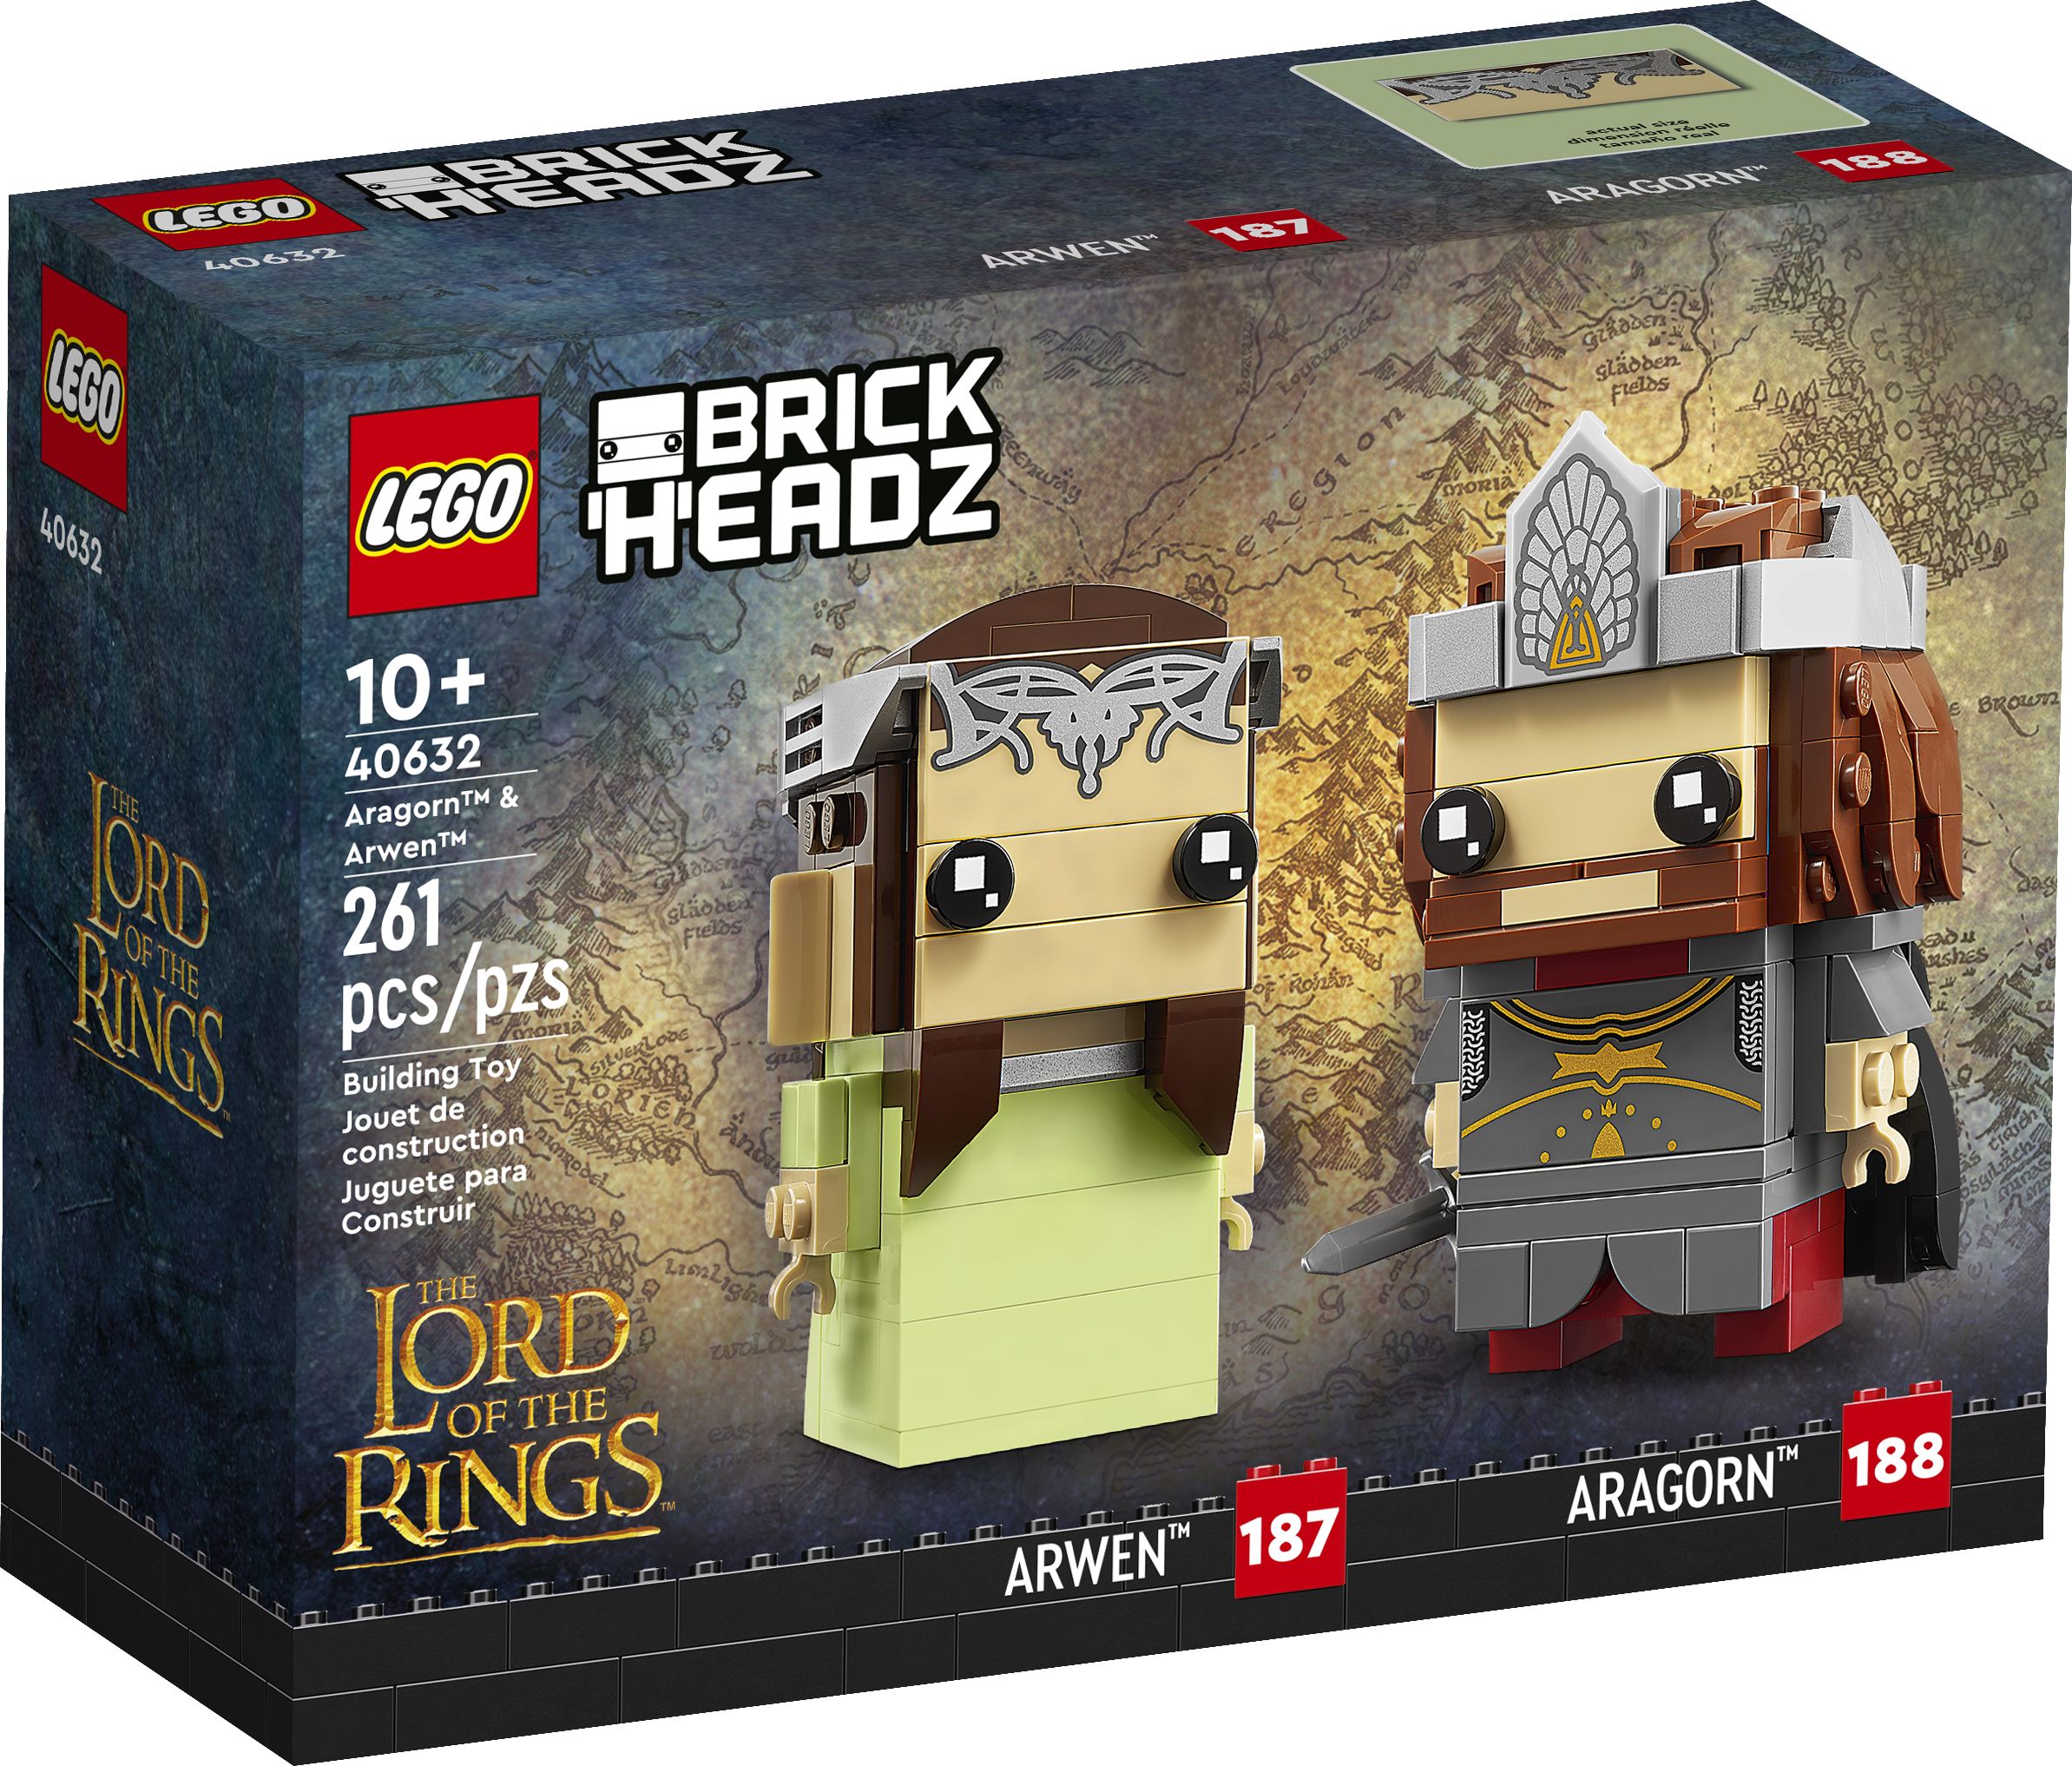 LEGO BrickHeadz 40632 Aragorn™ und Arwen™ LEGO_40632_Box1_v39.jpg